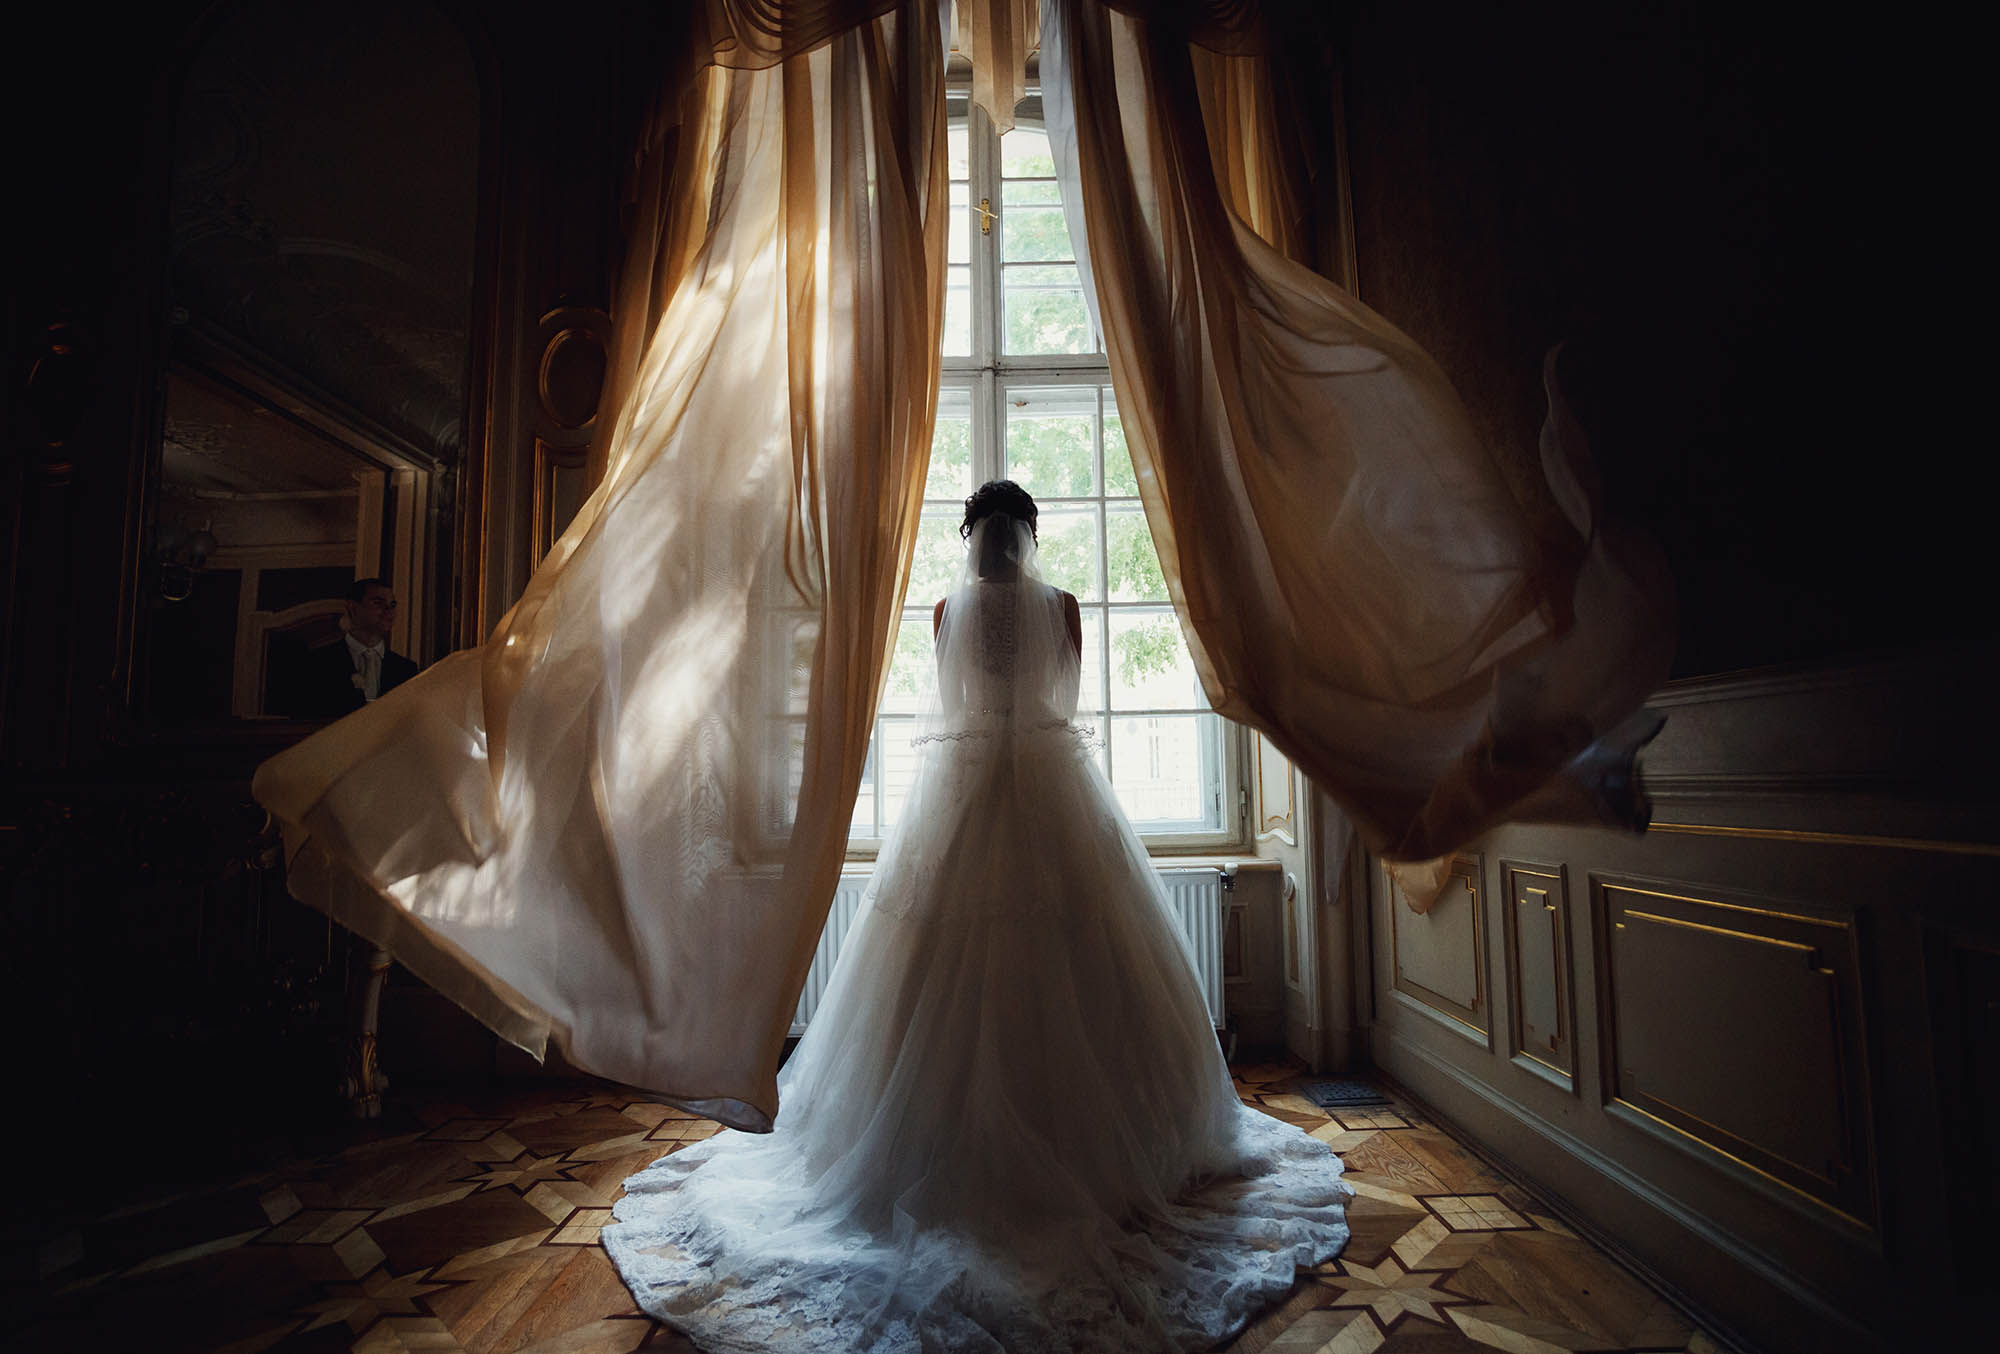 Amazing photo of the bride next to the window